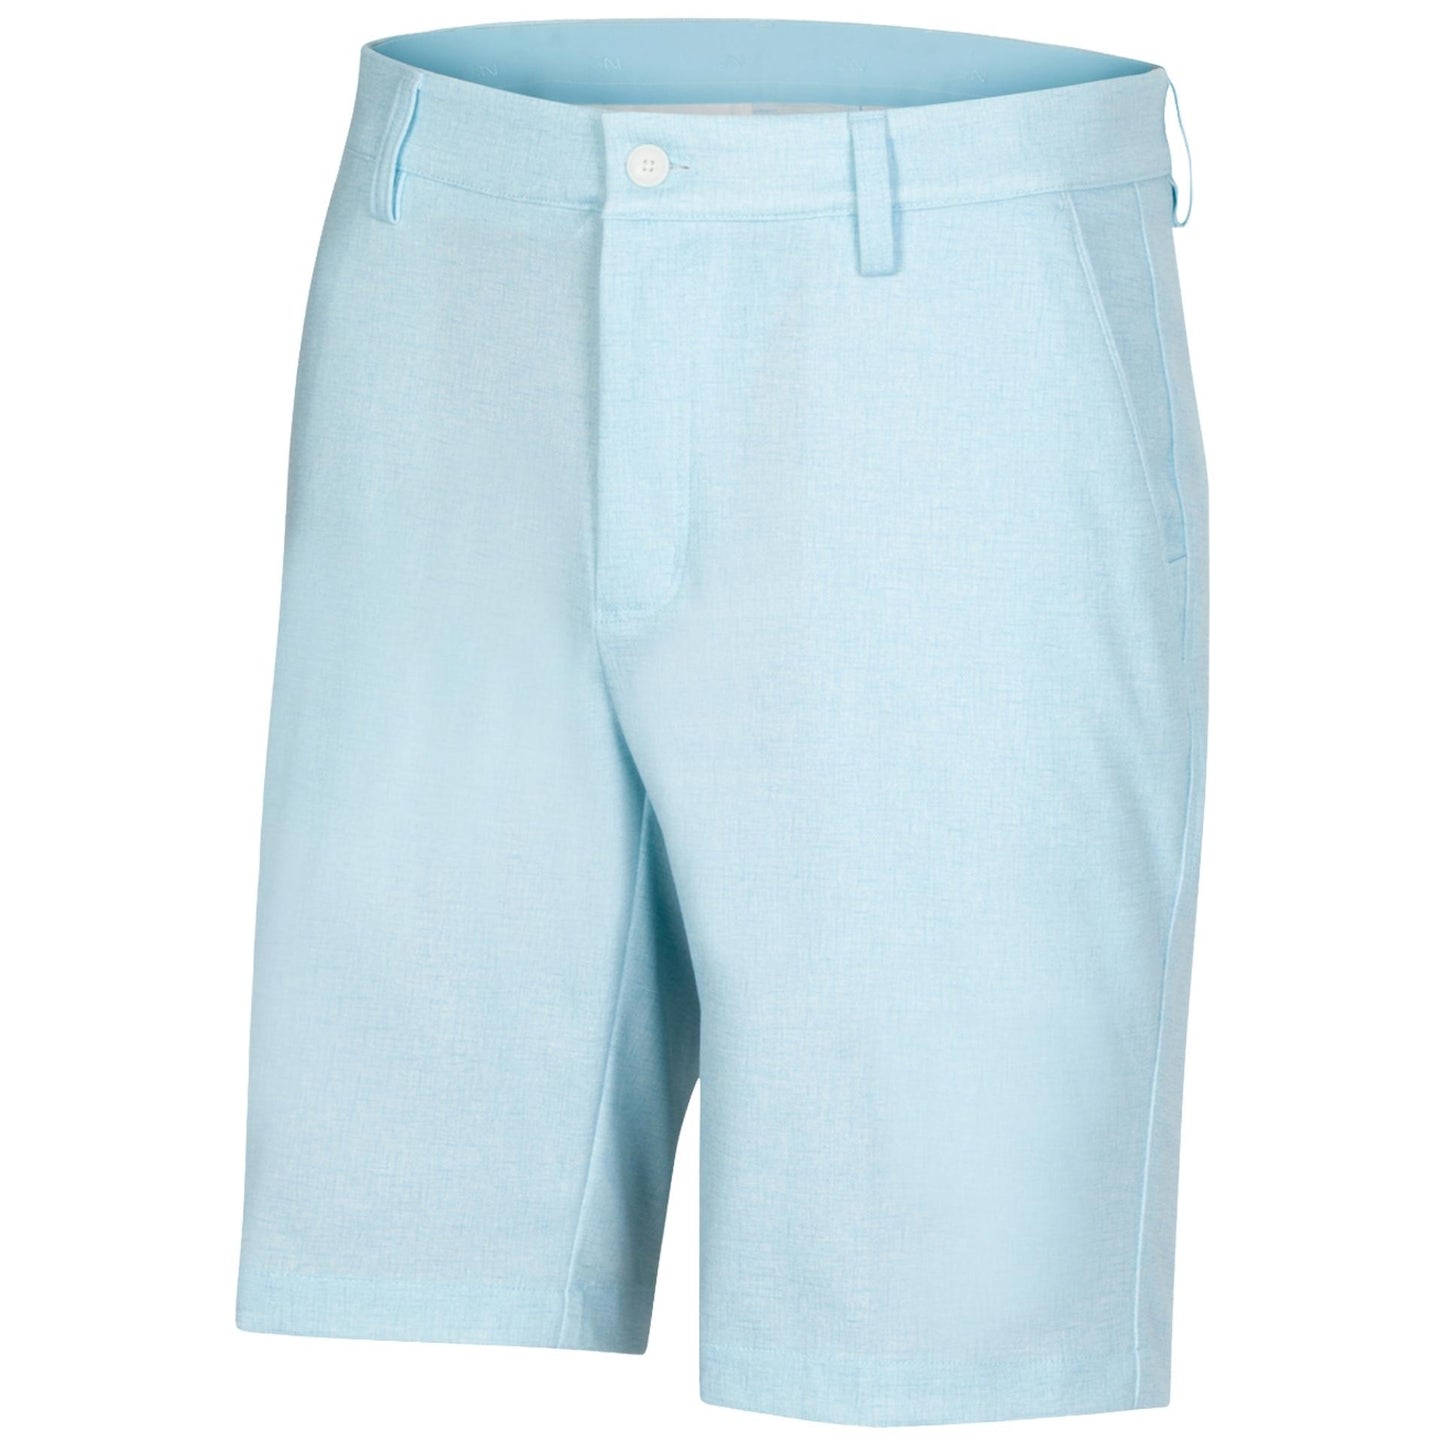 Greg Norman Bay Knit Golf Shorts